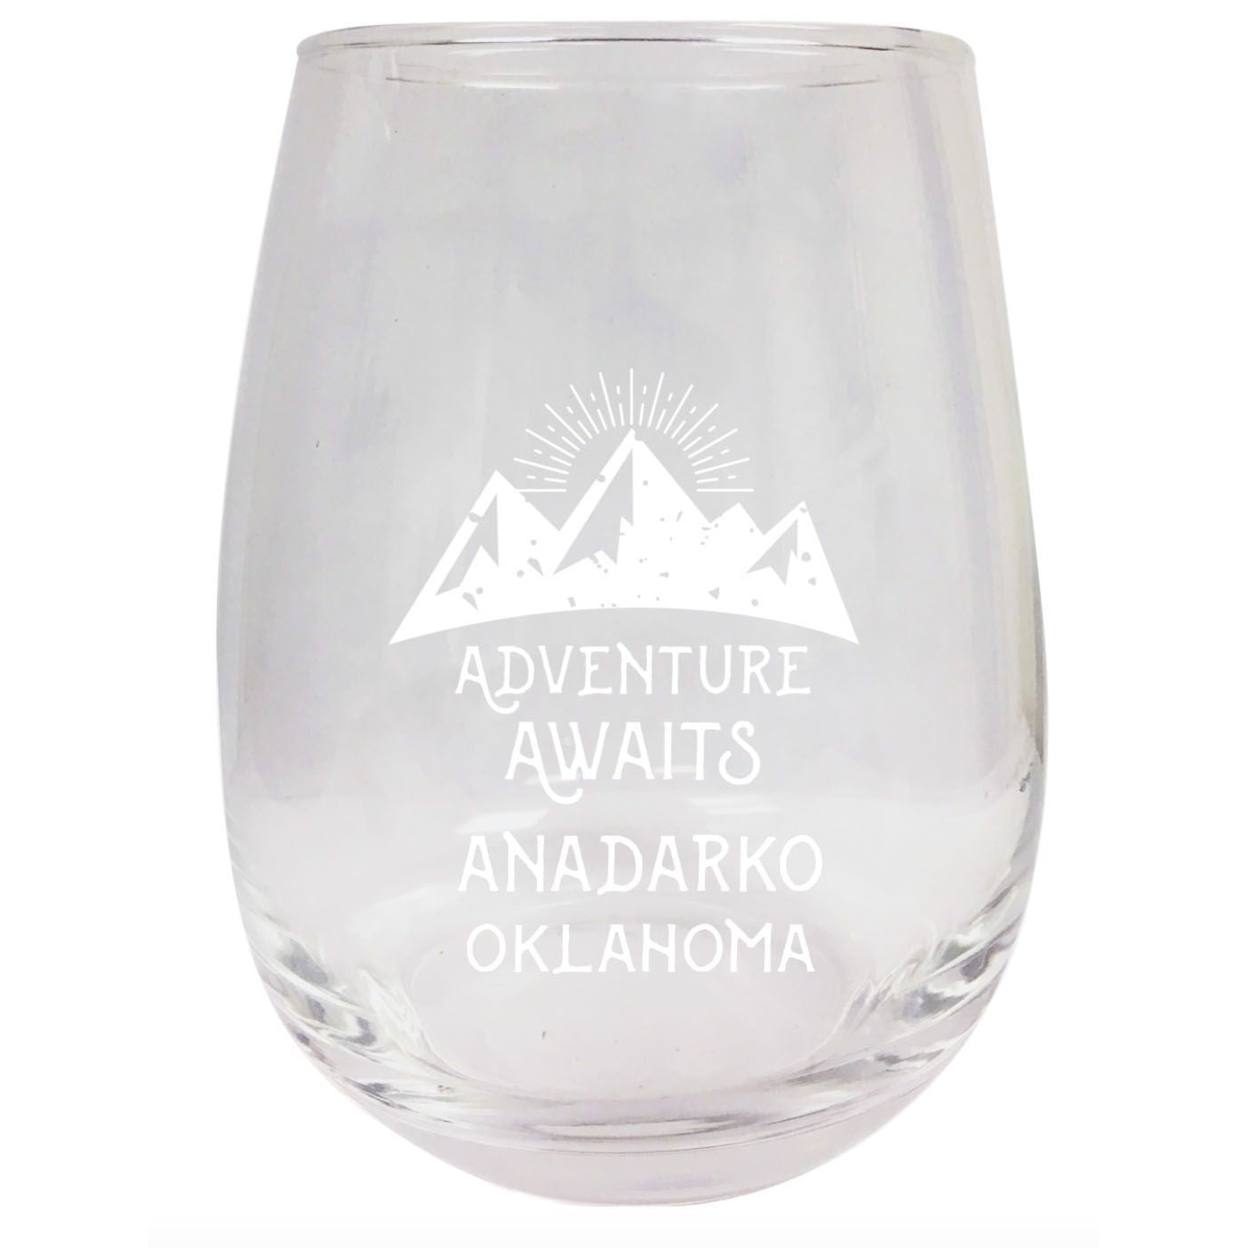 Oklahoma Engraved Stemless Wine Glass Duo